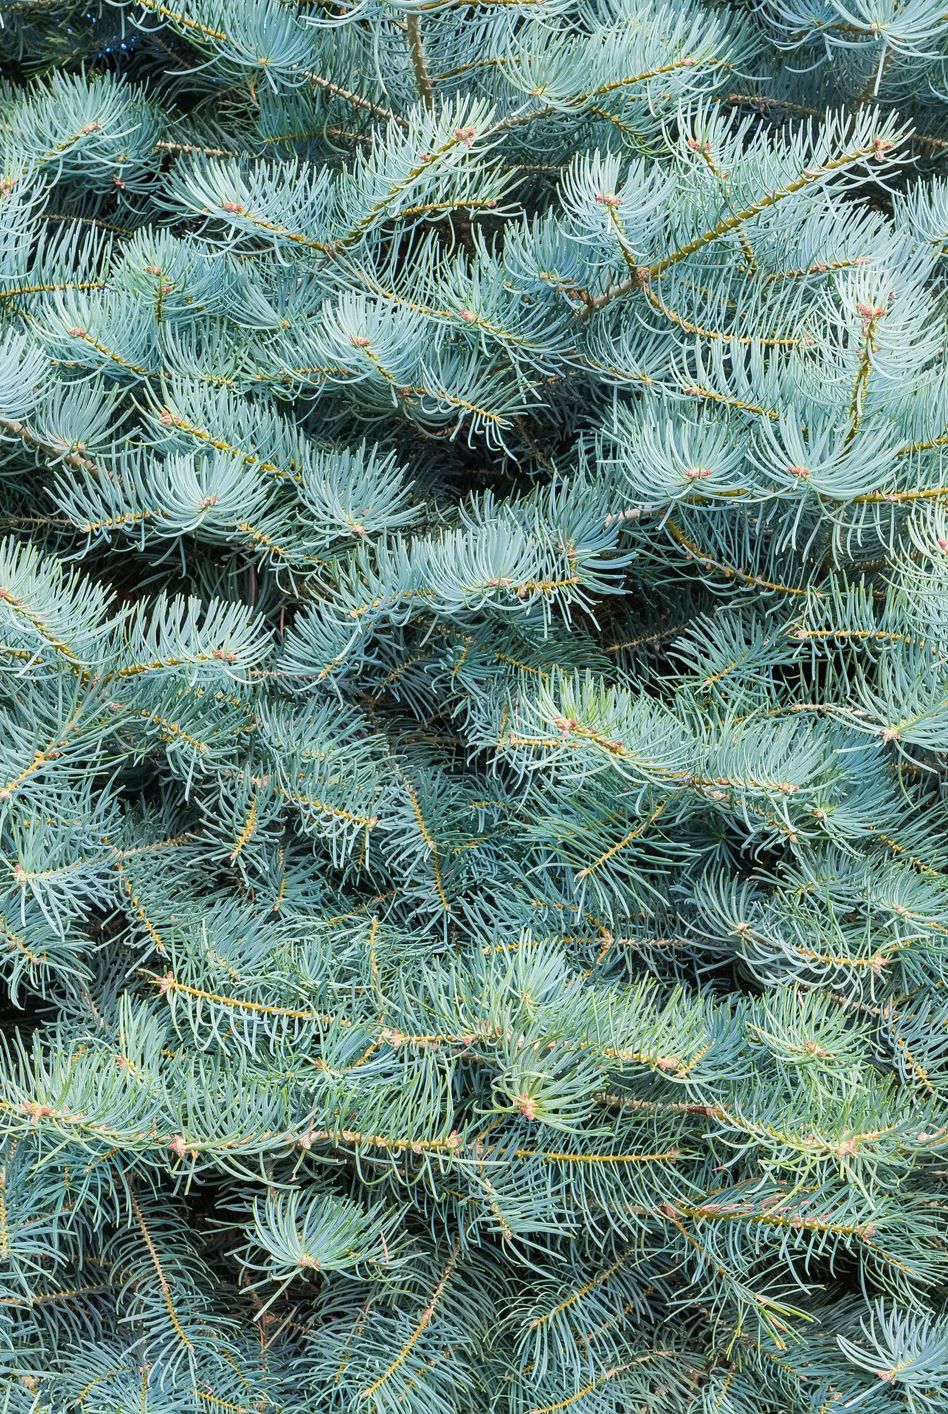 types of Christmas trees white fir